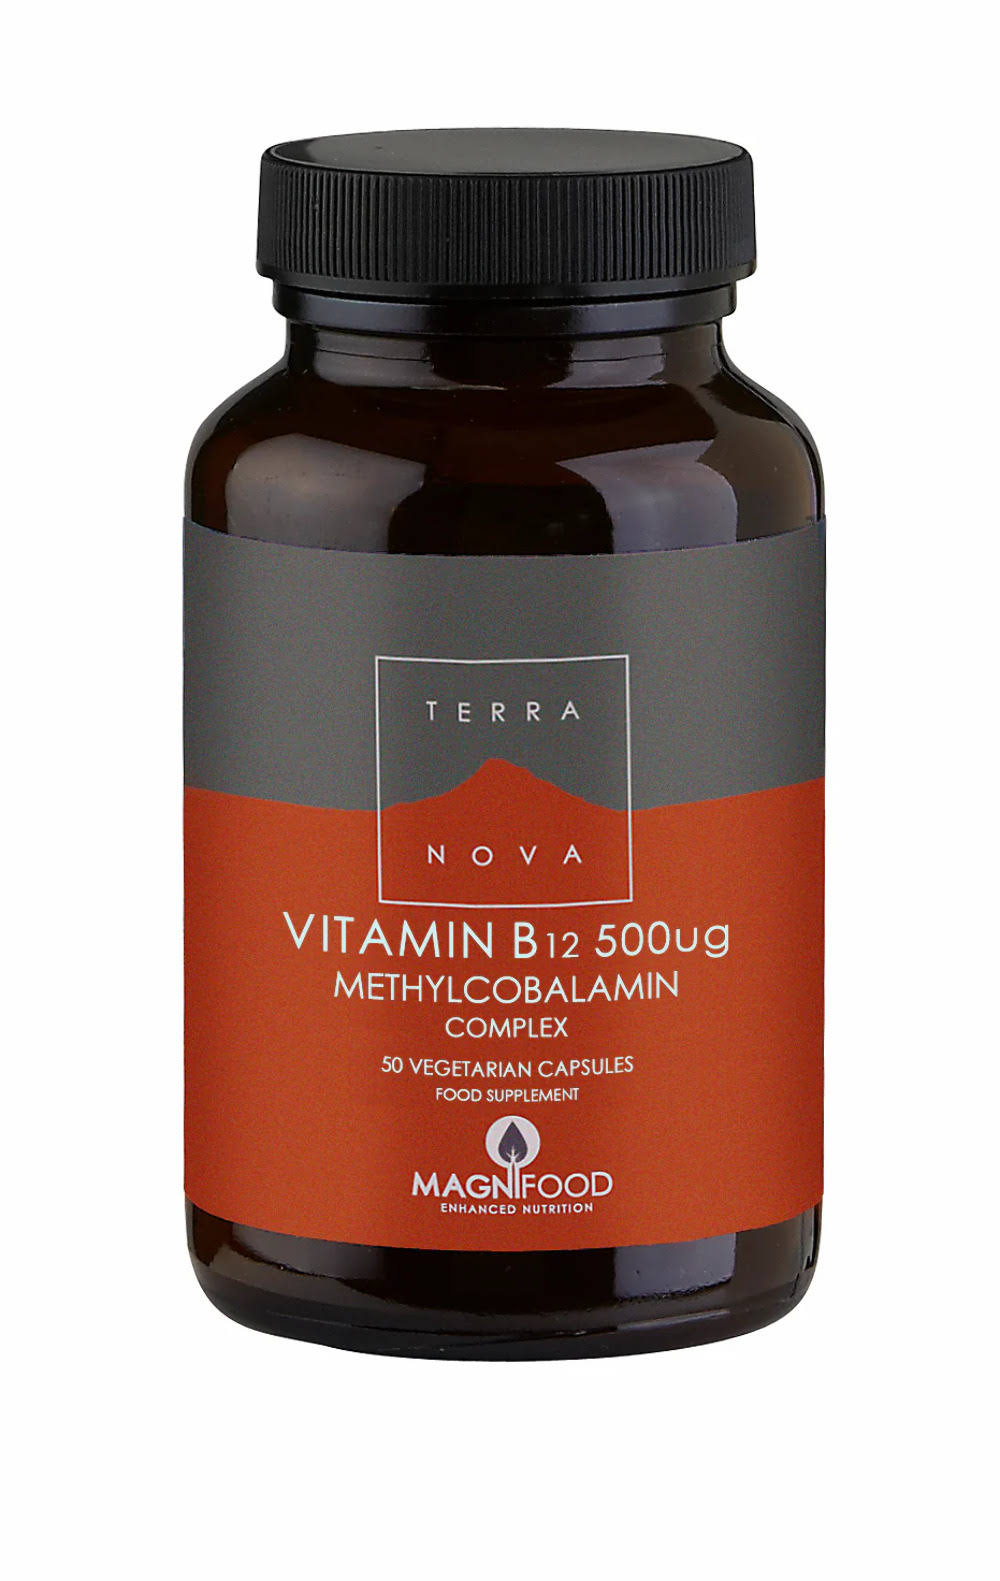 Terranova Magnifood Vitamin B12 Complex - 500mcg, 50 Capsules